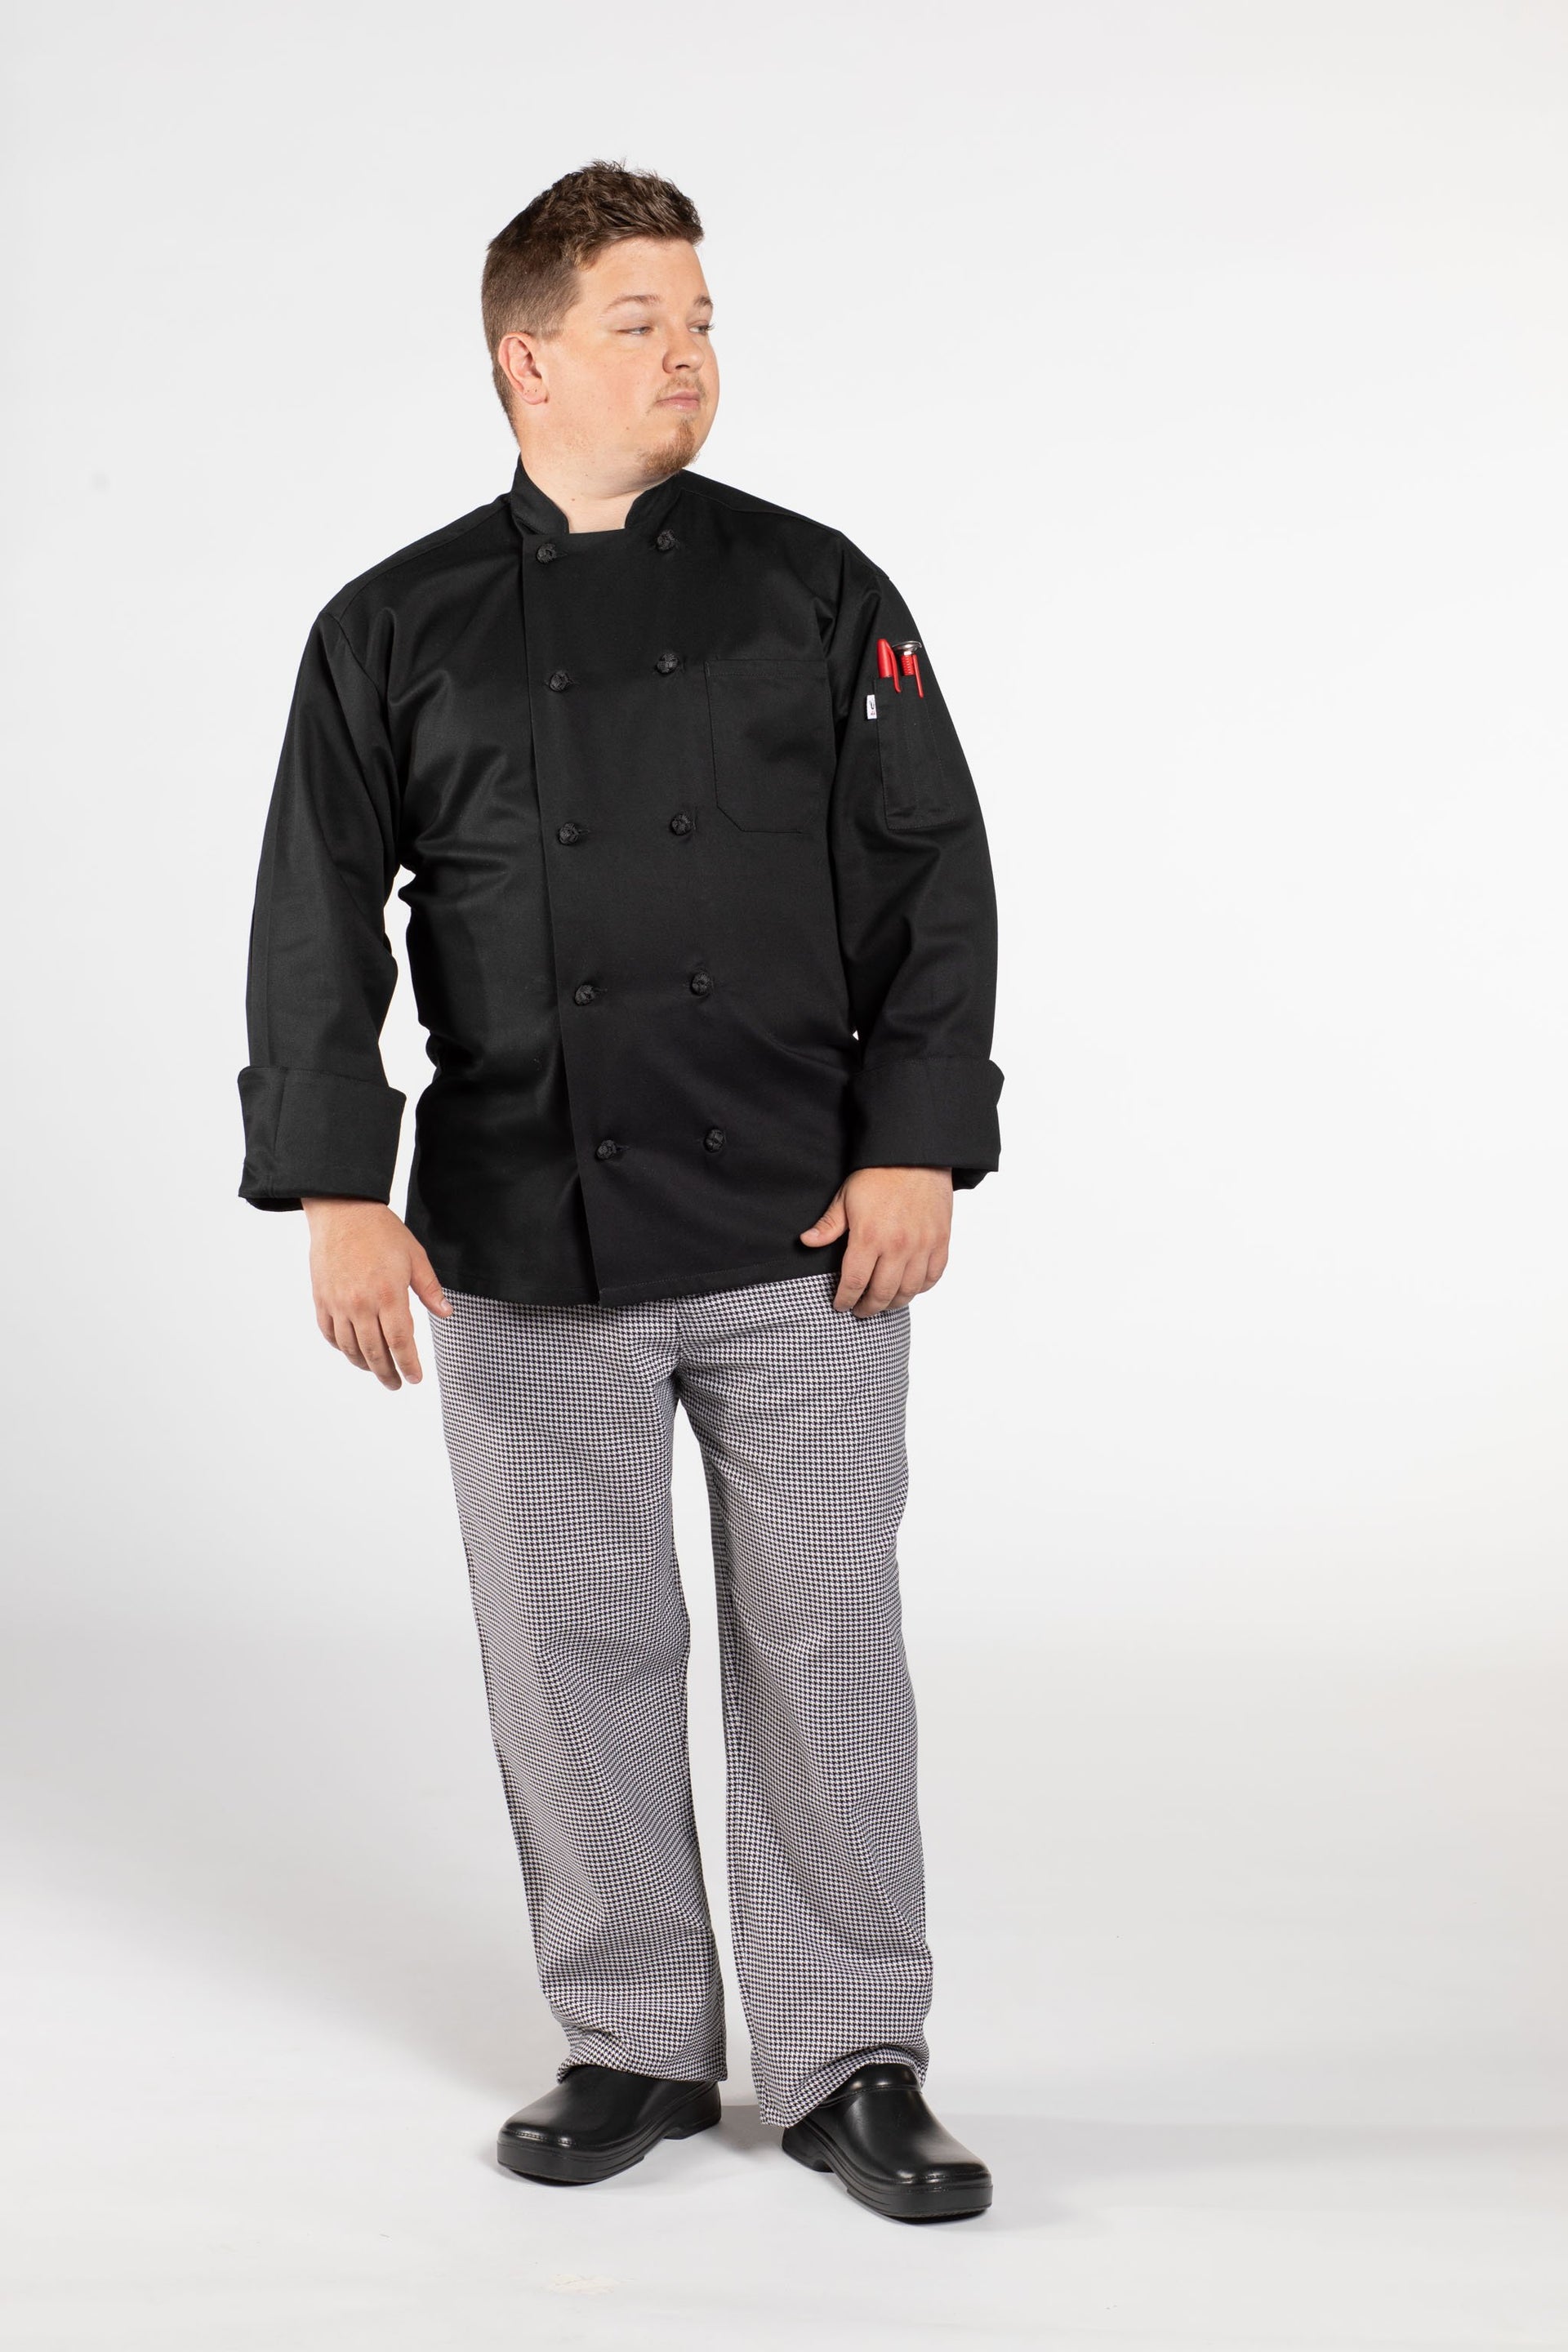 Uncommon Chef  Chef Coats, Aprons, Pants, Hats & More